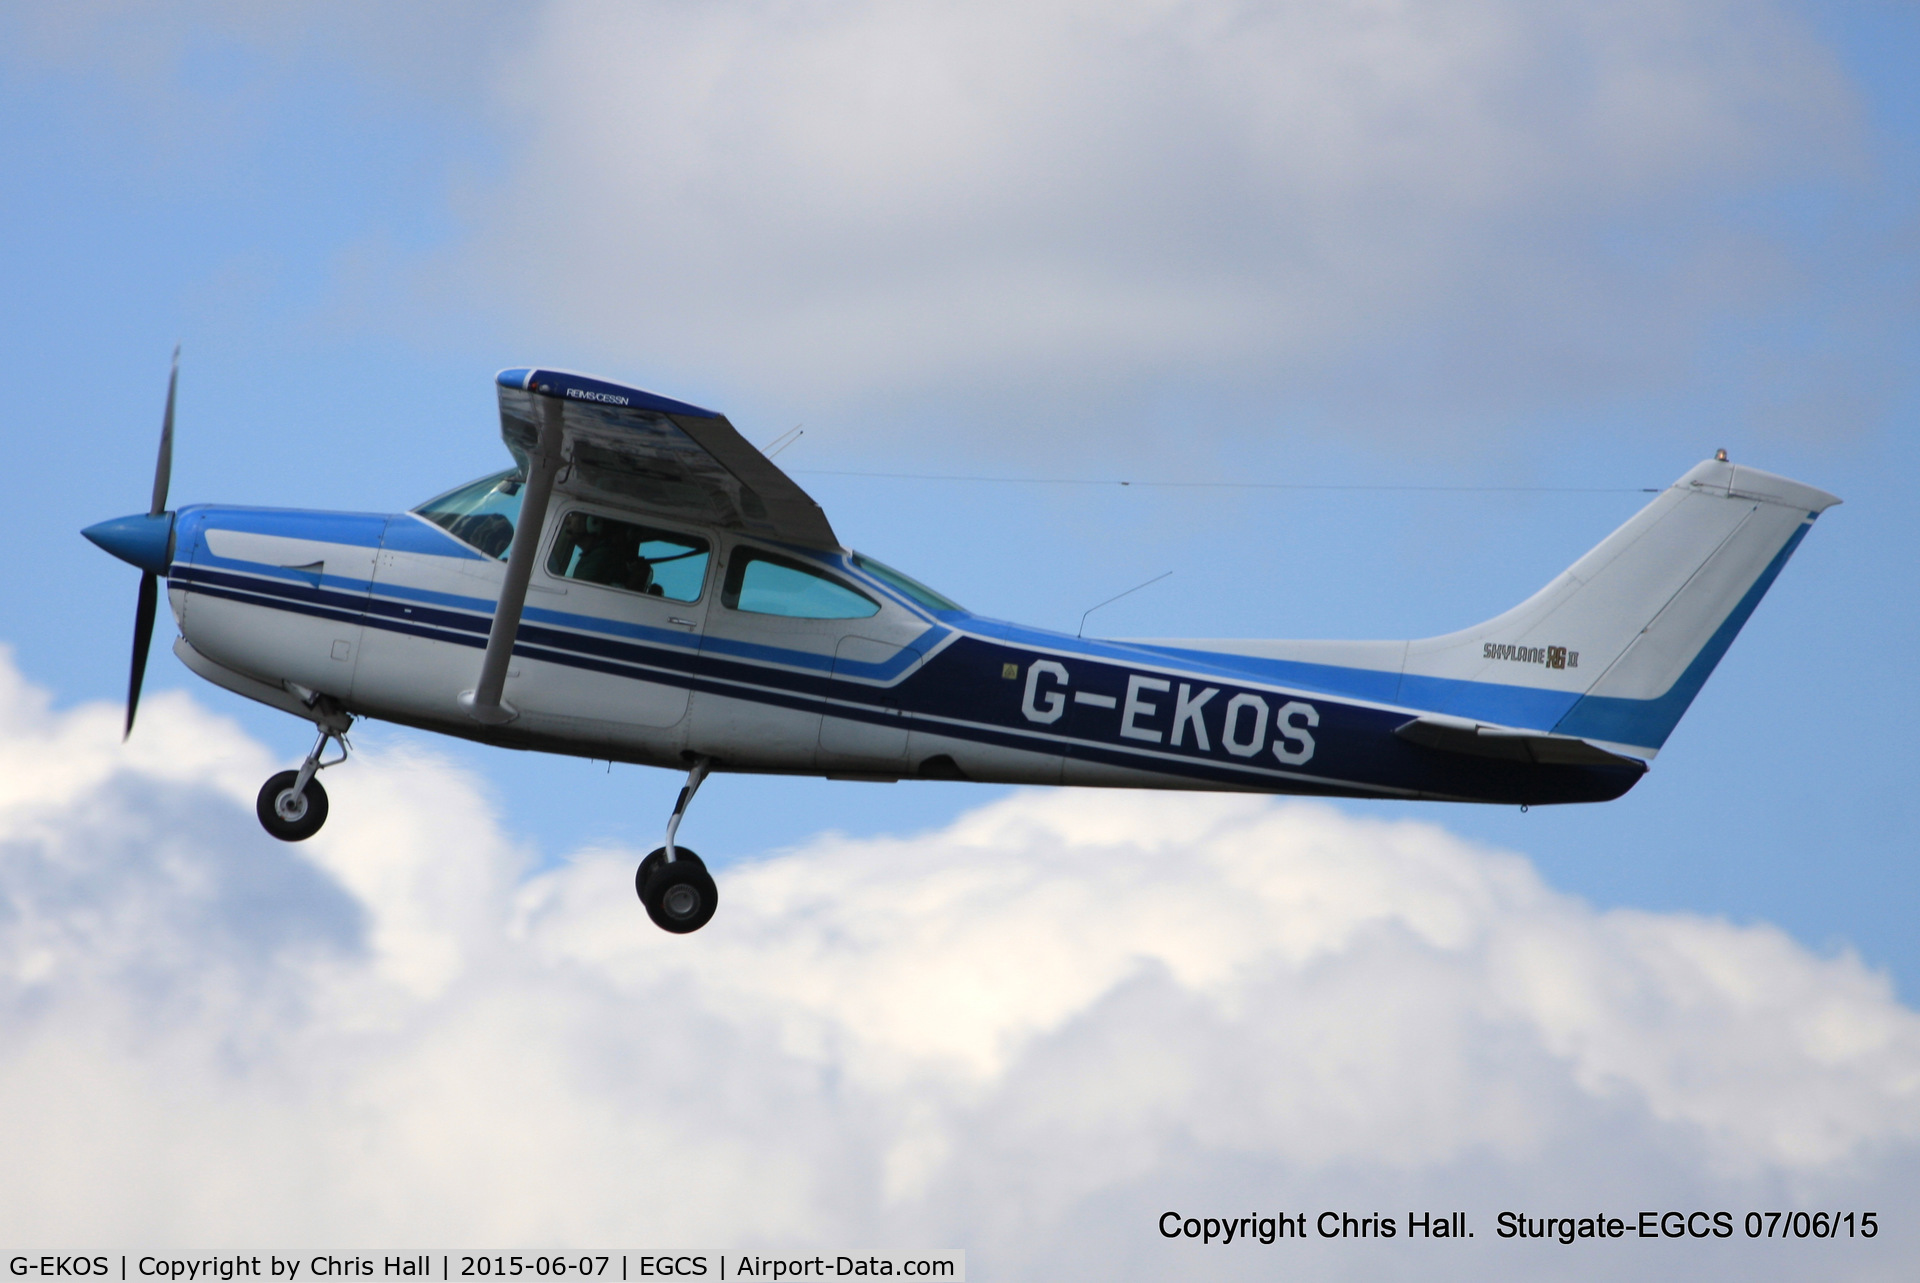 G-EKOS, 1978 Reims FR182 Skylane RG C/N 0017, at the Sturgate Summer flyin